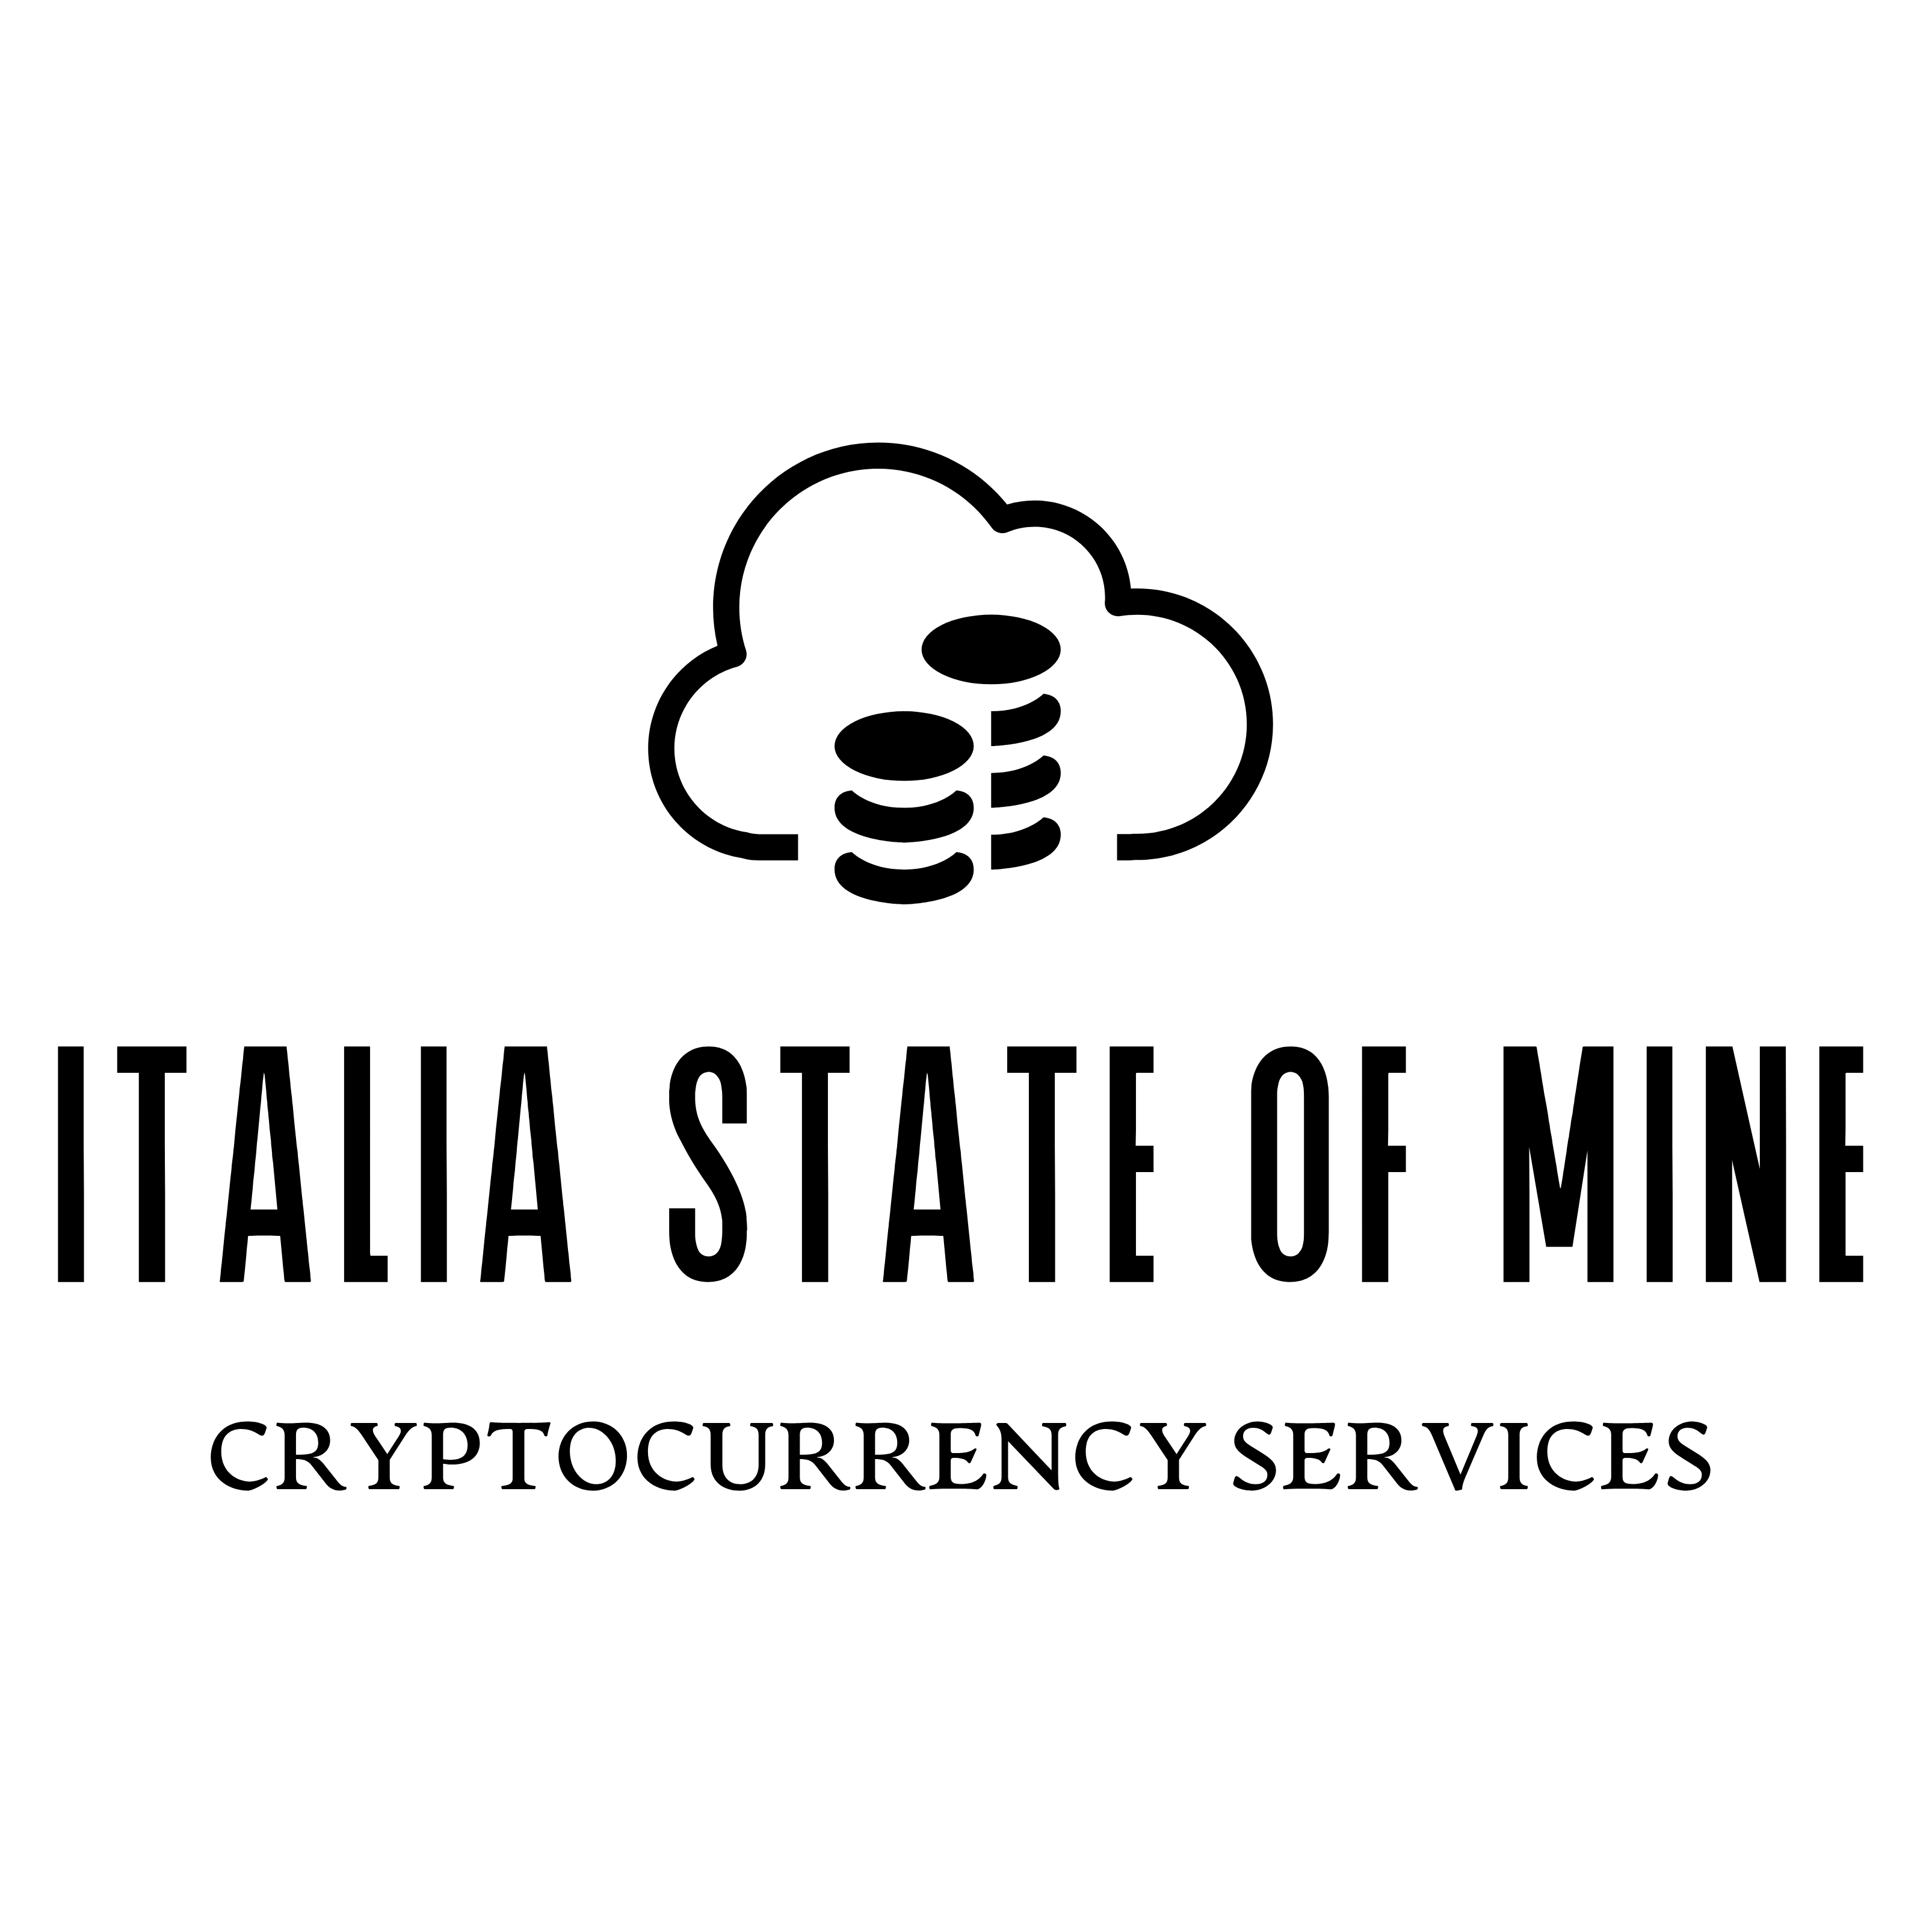 Italia State of Mine Bitcoin ATM